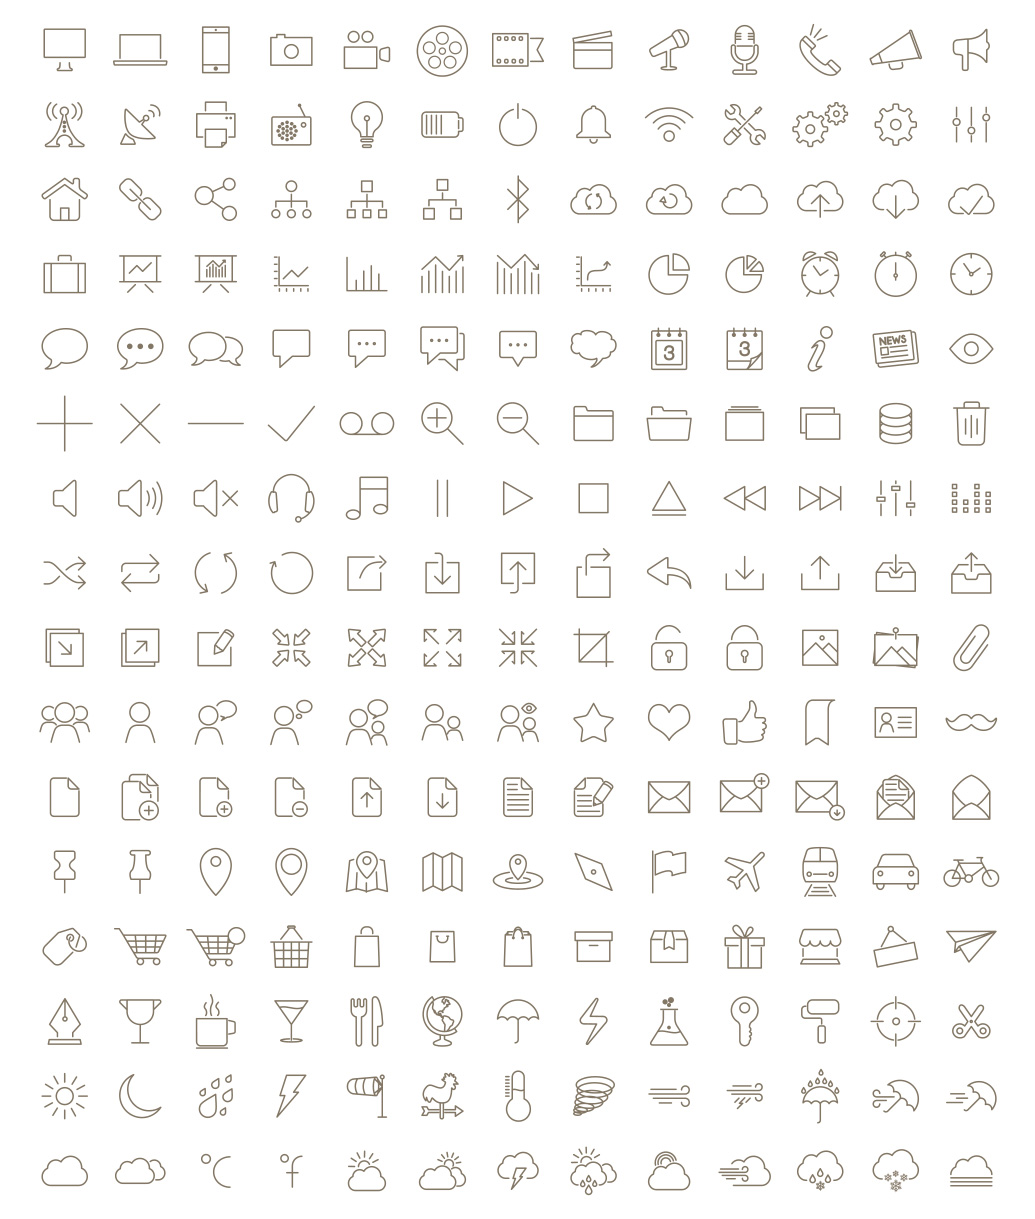 CSS-Ready 500 Icons by Hakan Ertan in 2015年3月的42套扁平化图标合集下载